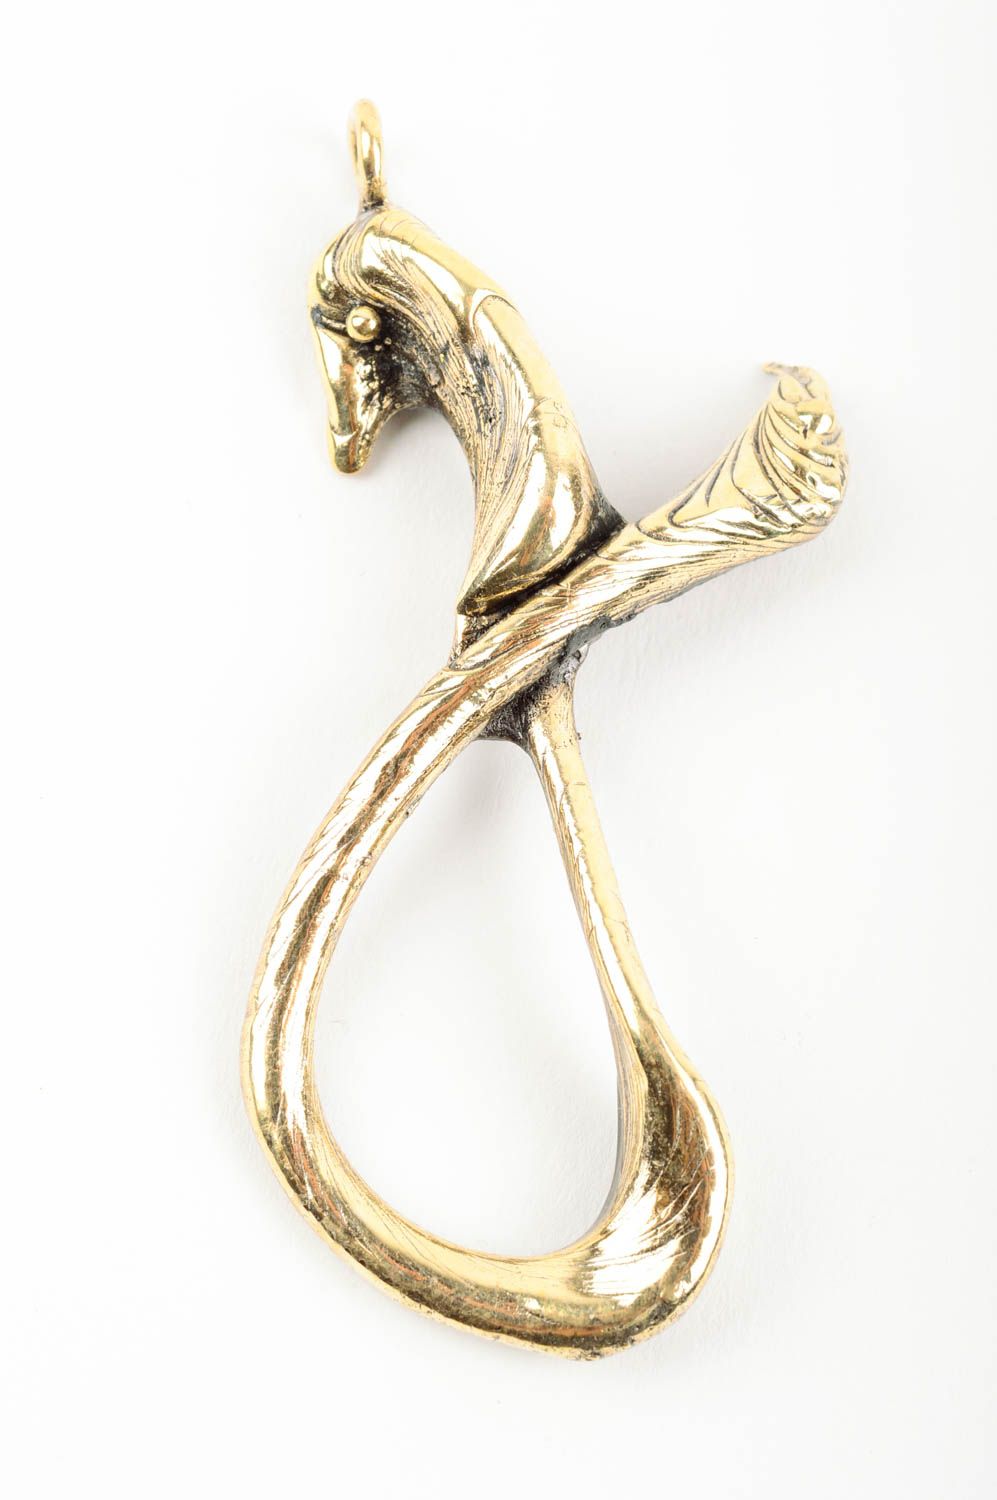 Handmade unusual pendant massive accessories made of brass designer jewelry photo 1